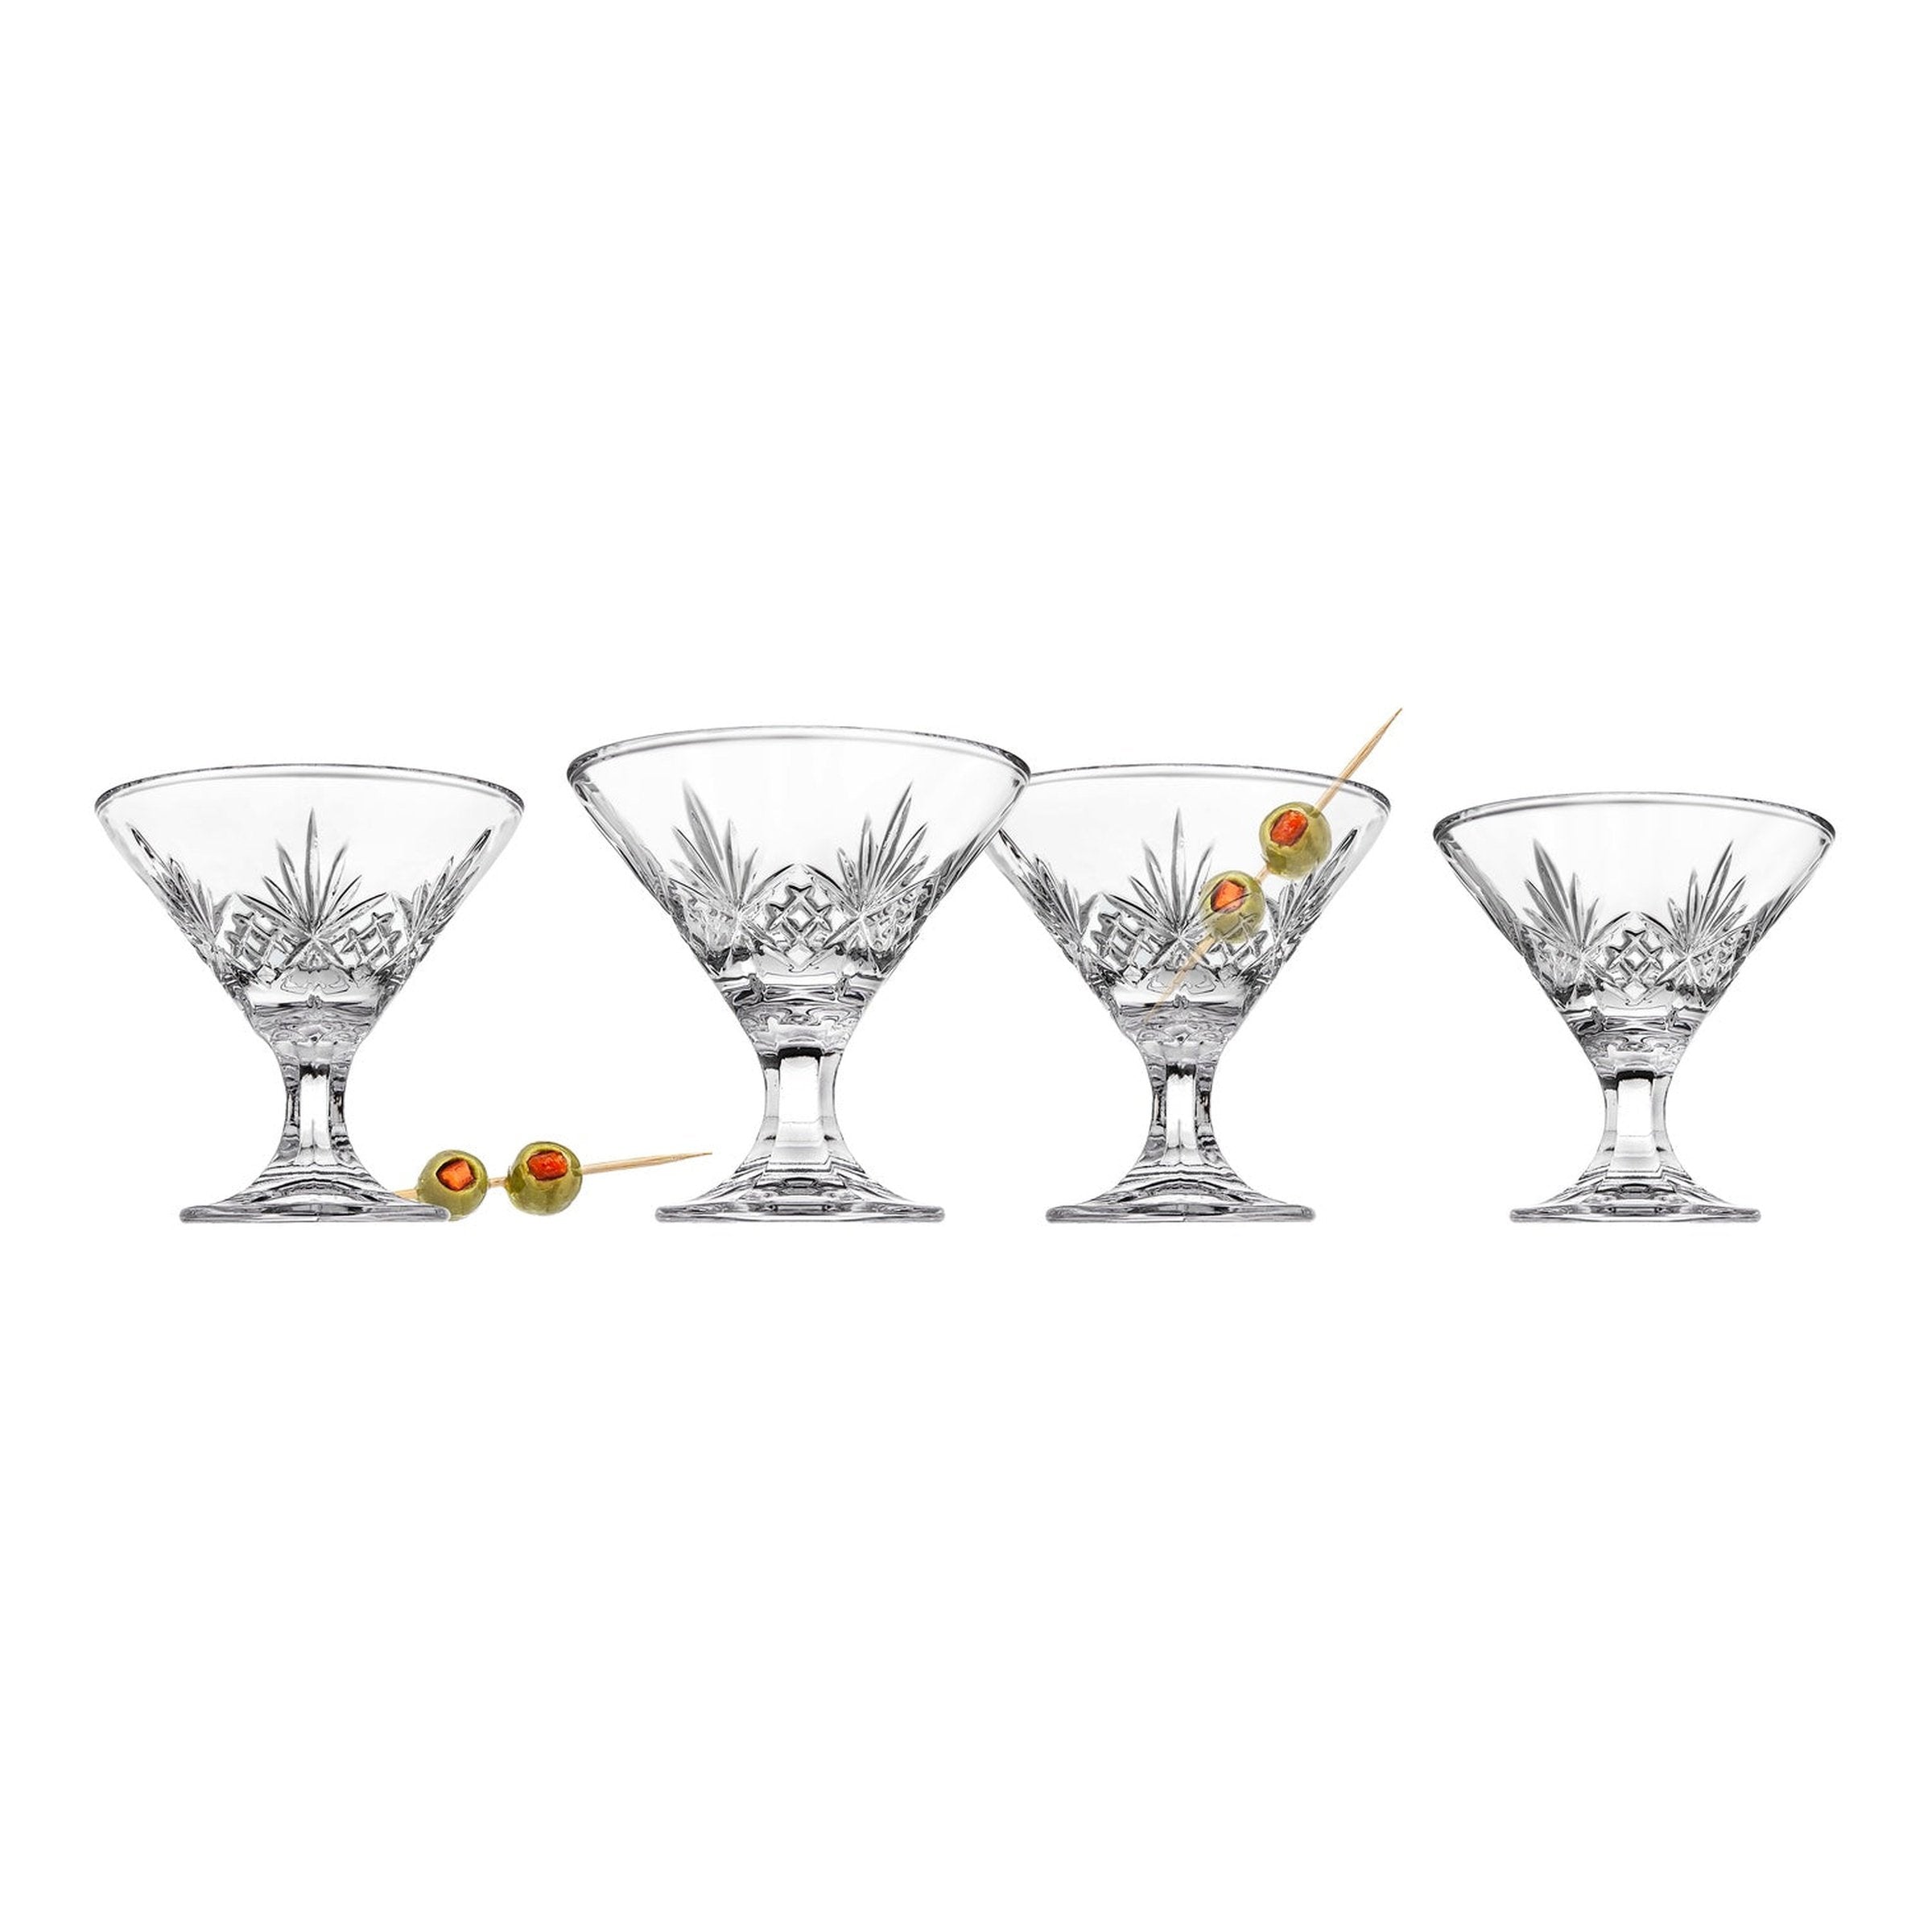 Godinger Martini Glasses - Set of 4, 8oz Dessert Cups, Italian  Made Cocktail Glasses: Martini Glasses